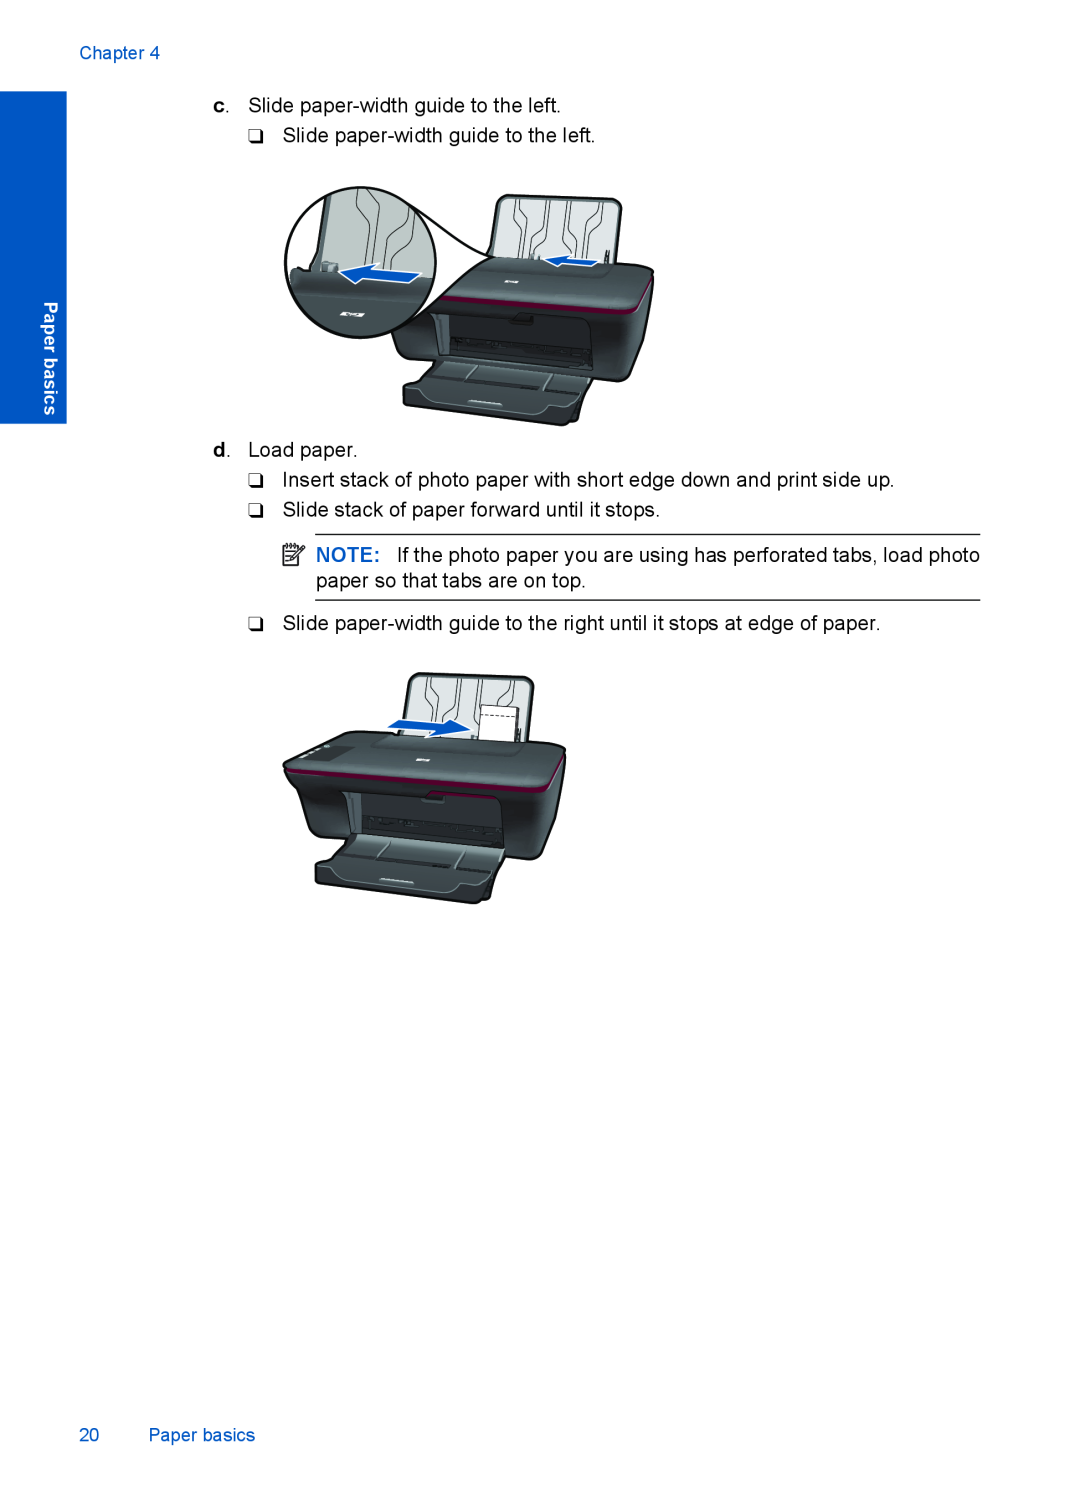 HP 1056 - J410a, 1051 c. Slide paper-width guide to the left, d. Load paper, Slide stack of paper forward until it stops 